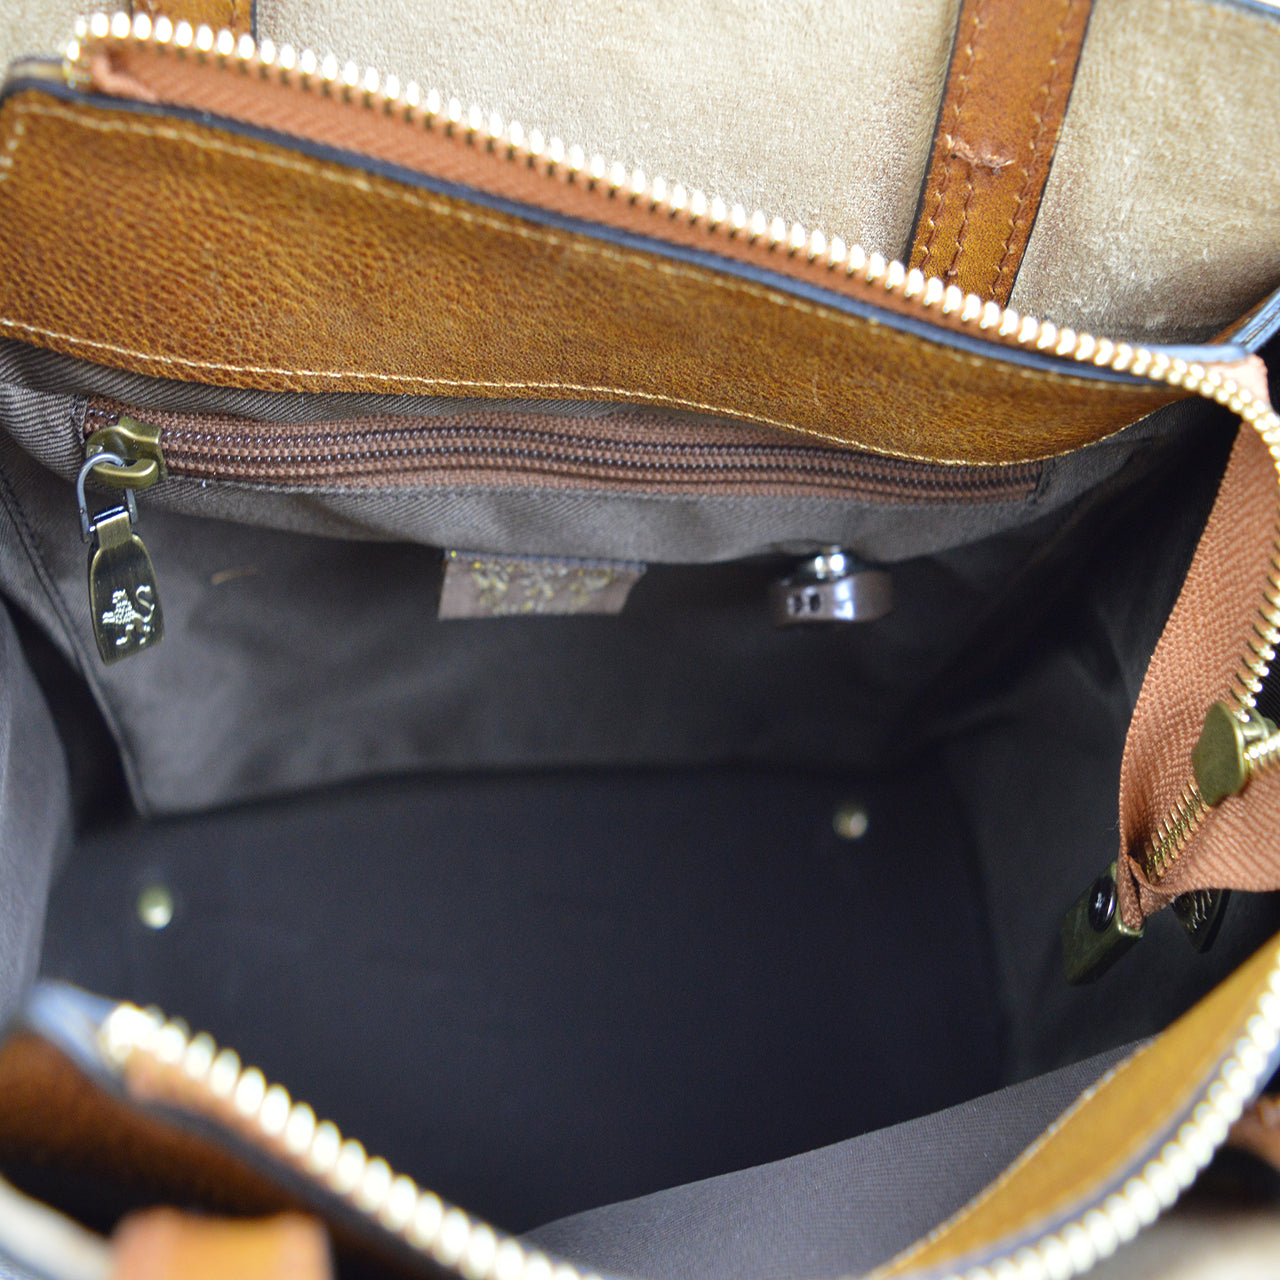 Pratesi Paterno B488 Lady Bag in genuine Italian leather